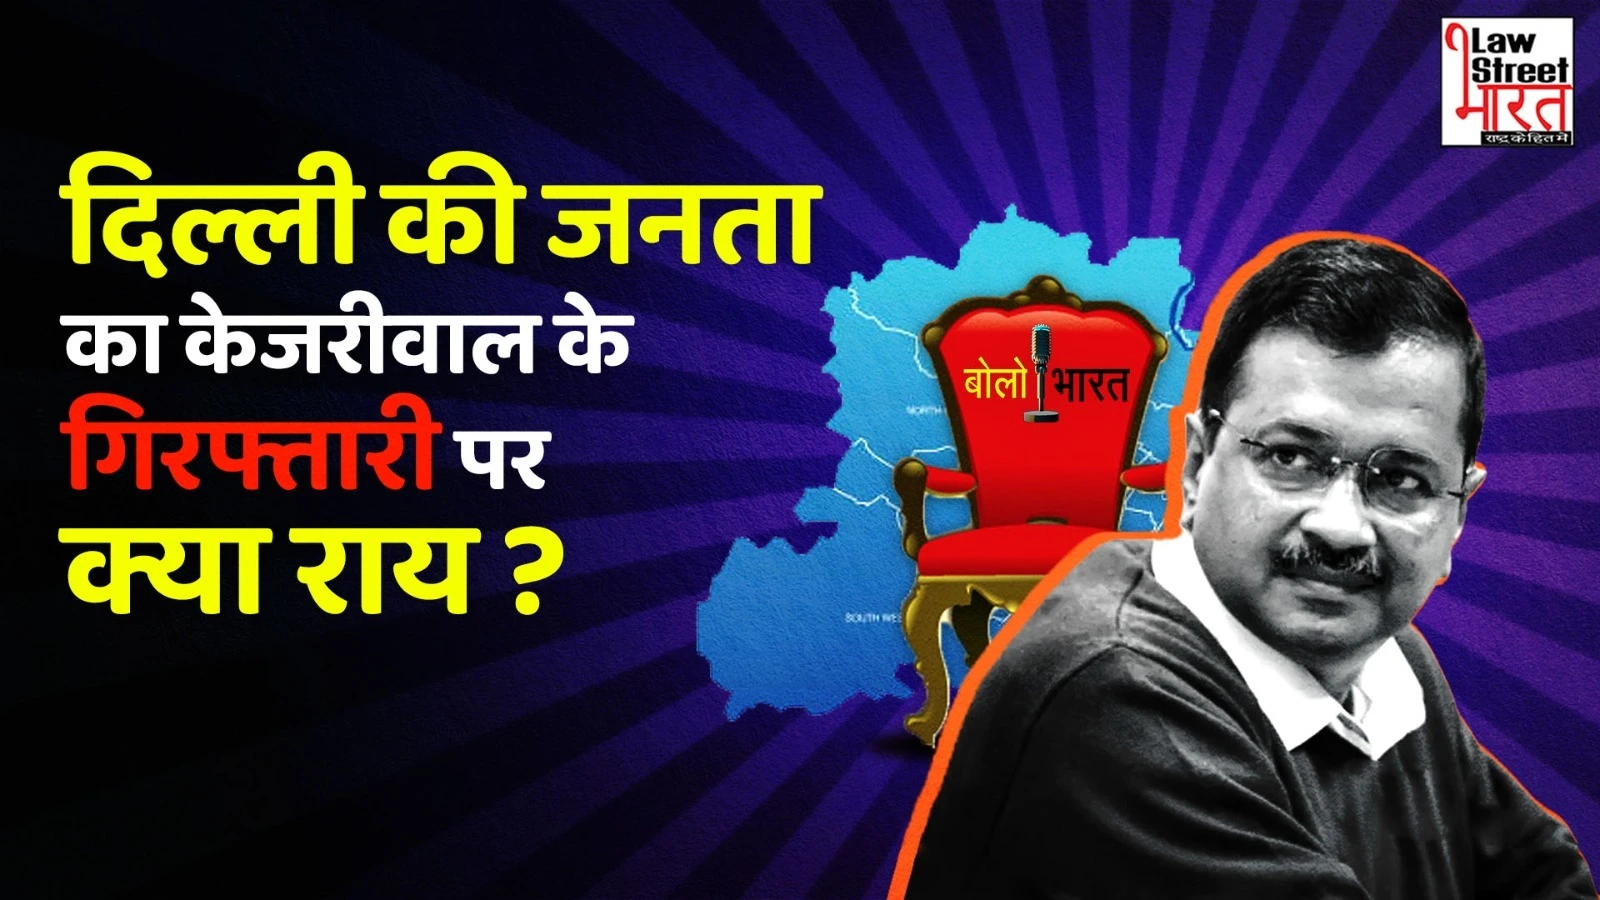 Arvind Kejriwal in Tihar: Should he continue as Delhi CM?